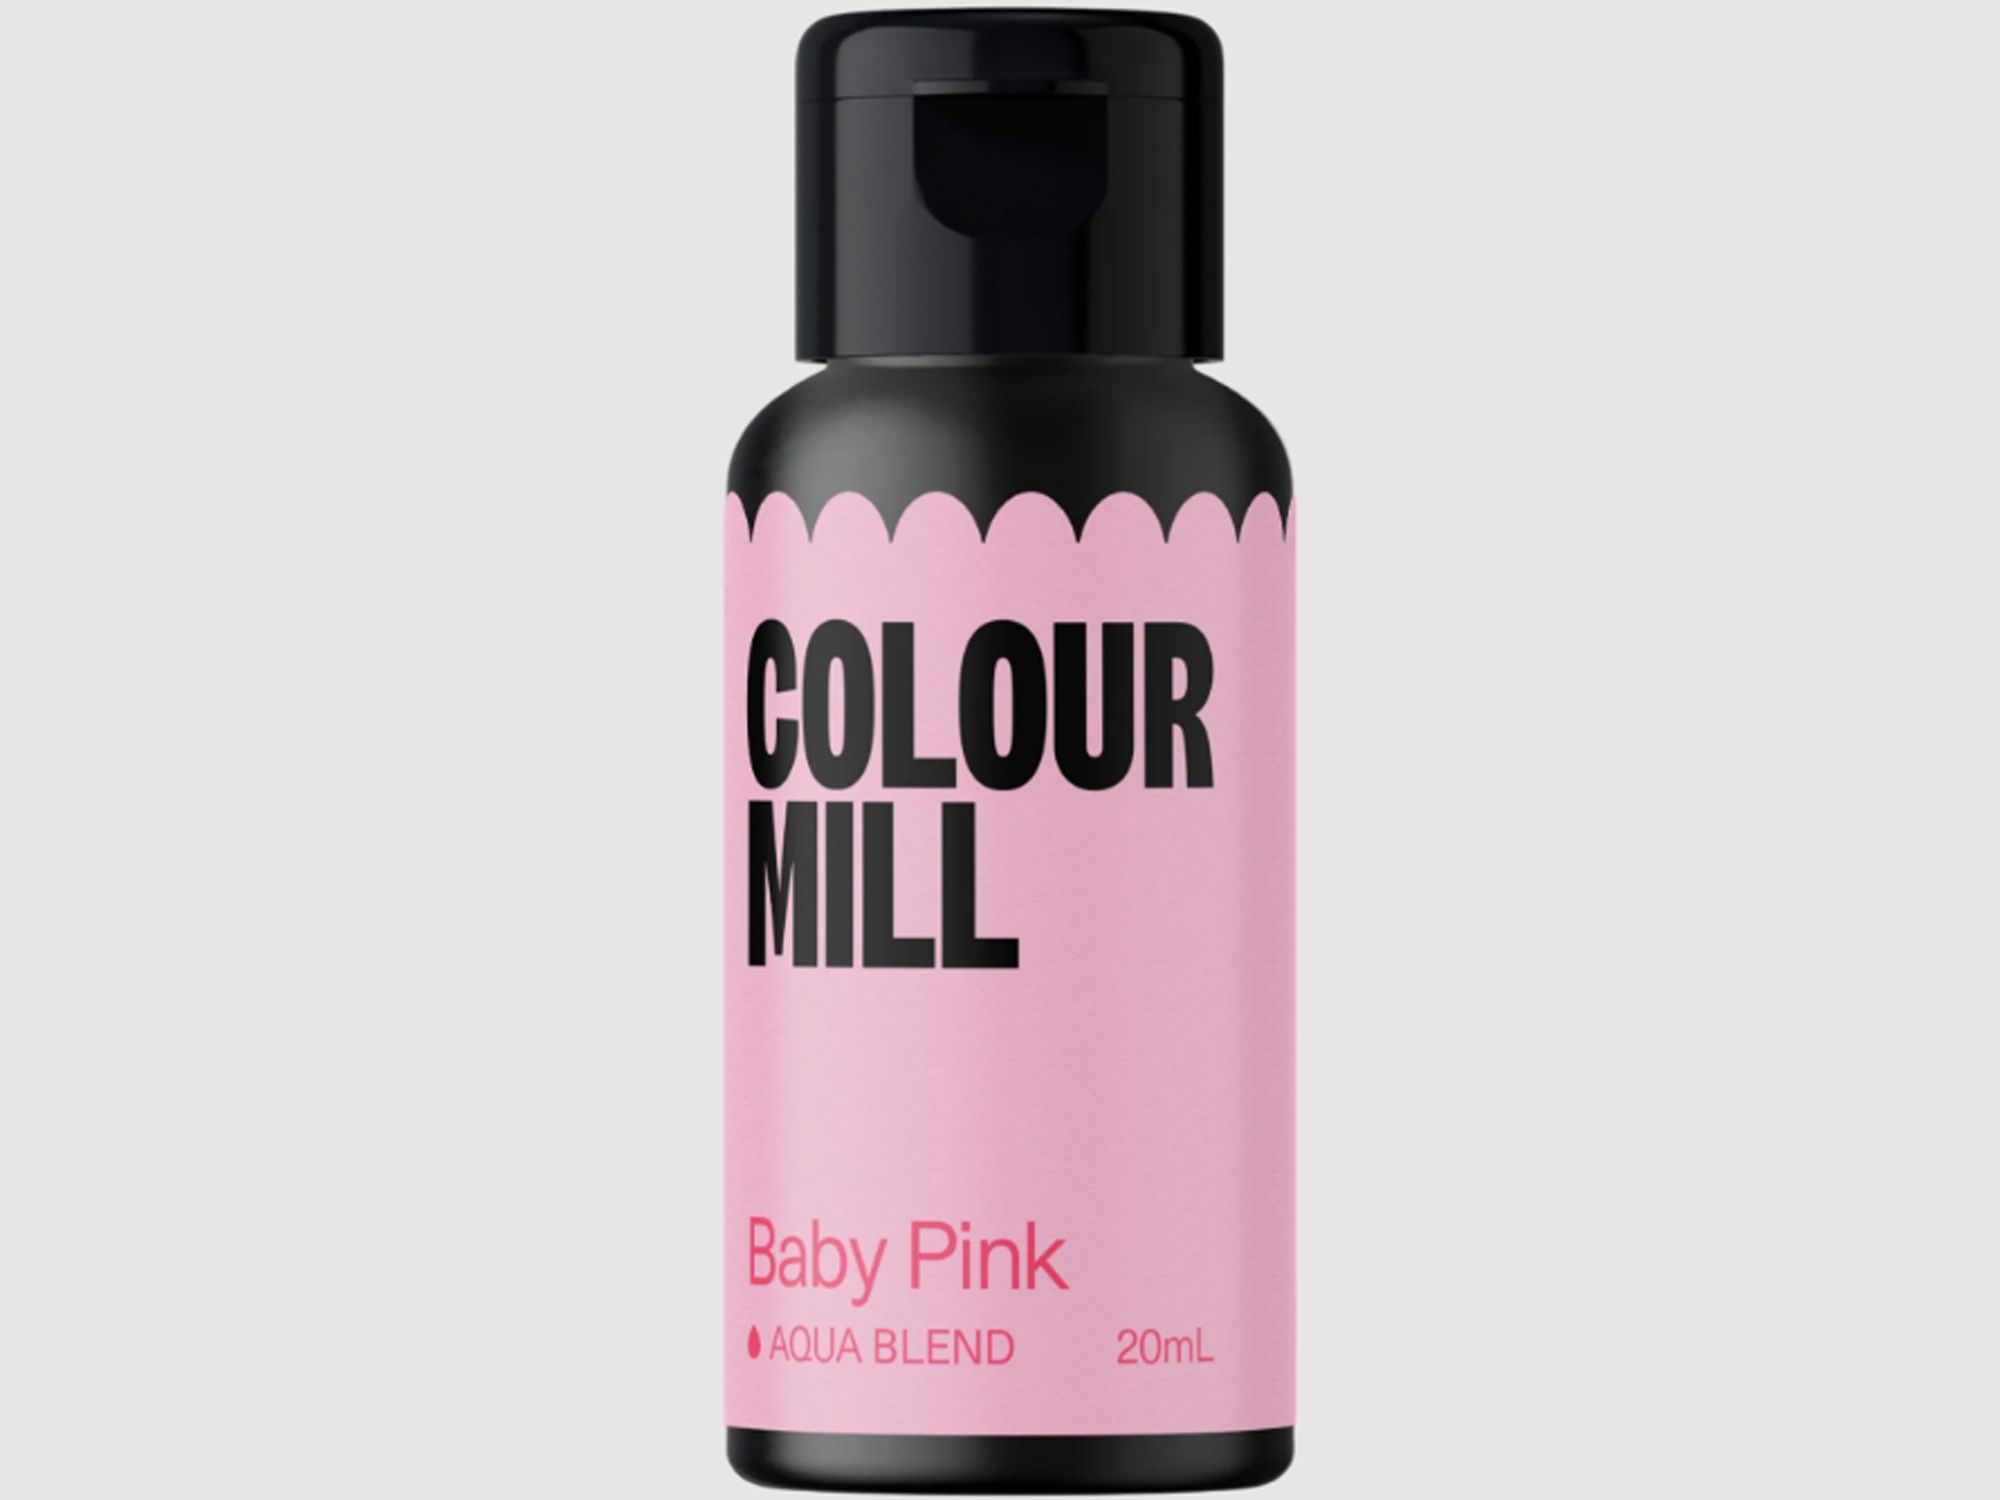 Colour Mill Baby Pink (Aqua Blend) 20ml